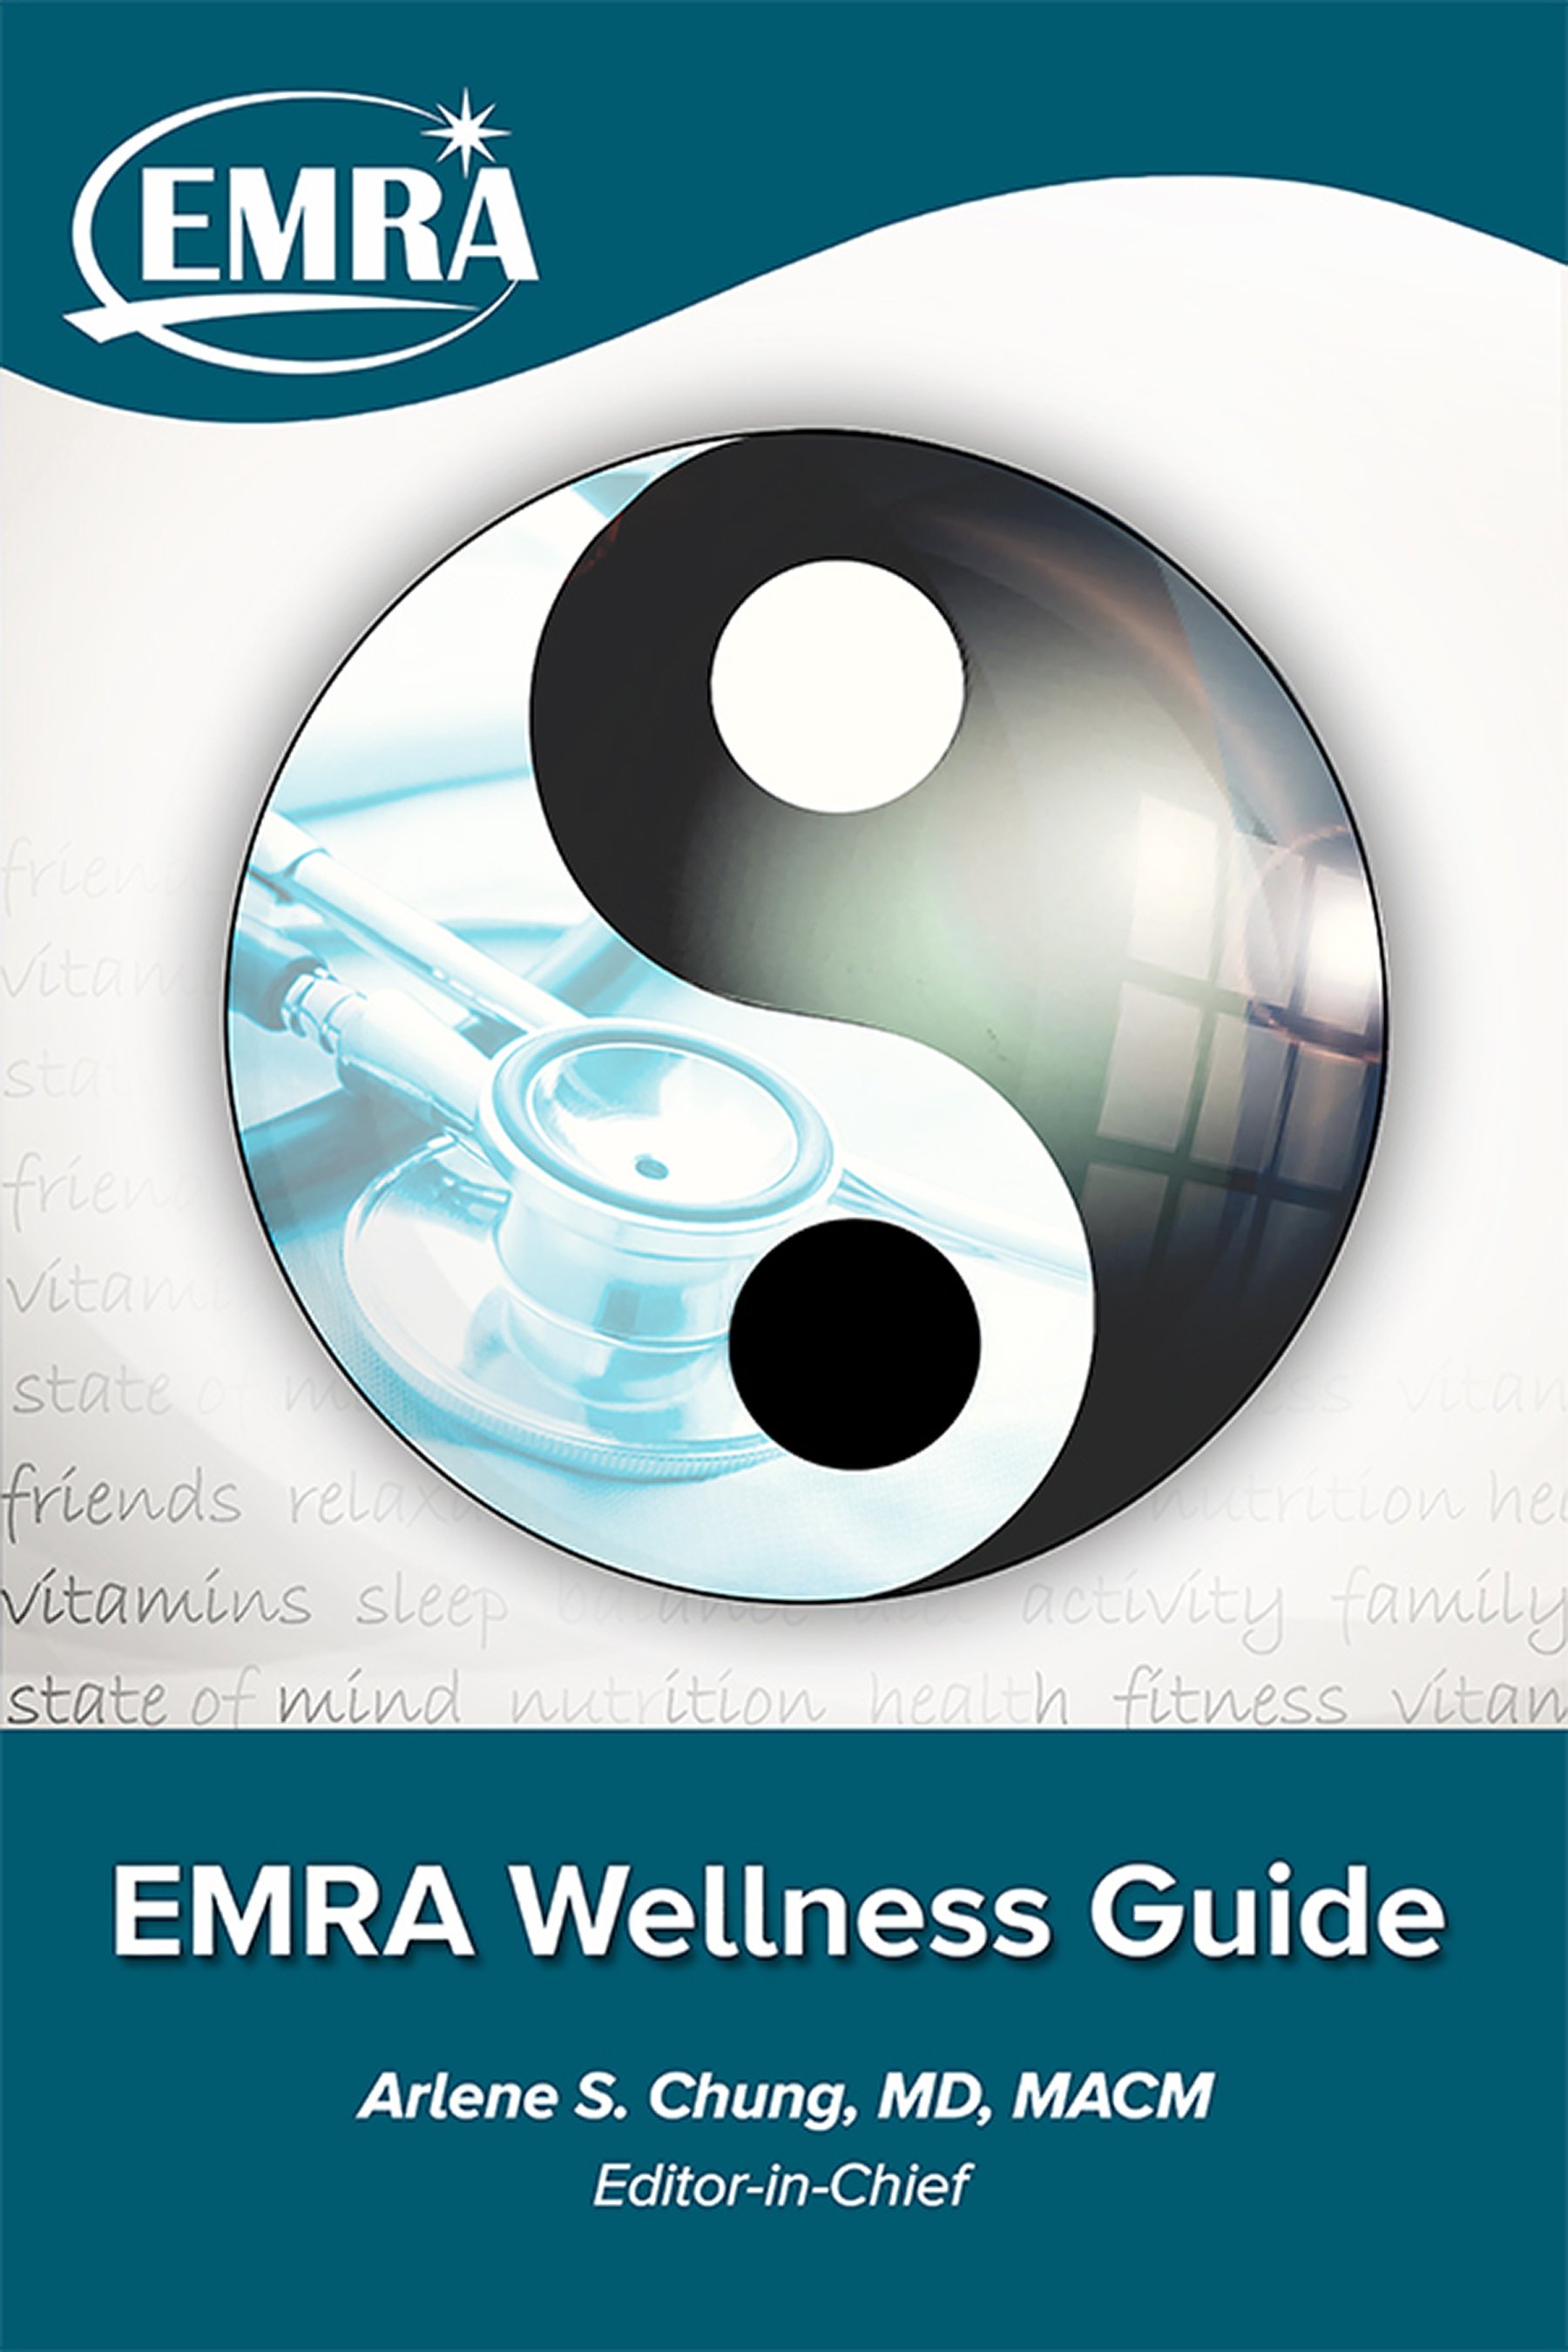 EMRA - Wellness Guide - Low-res FINAL COVER.jpg